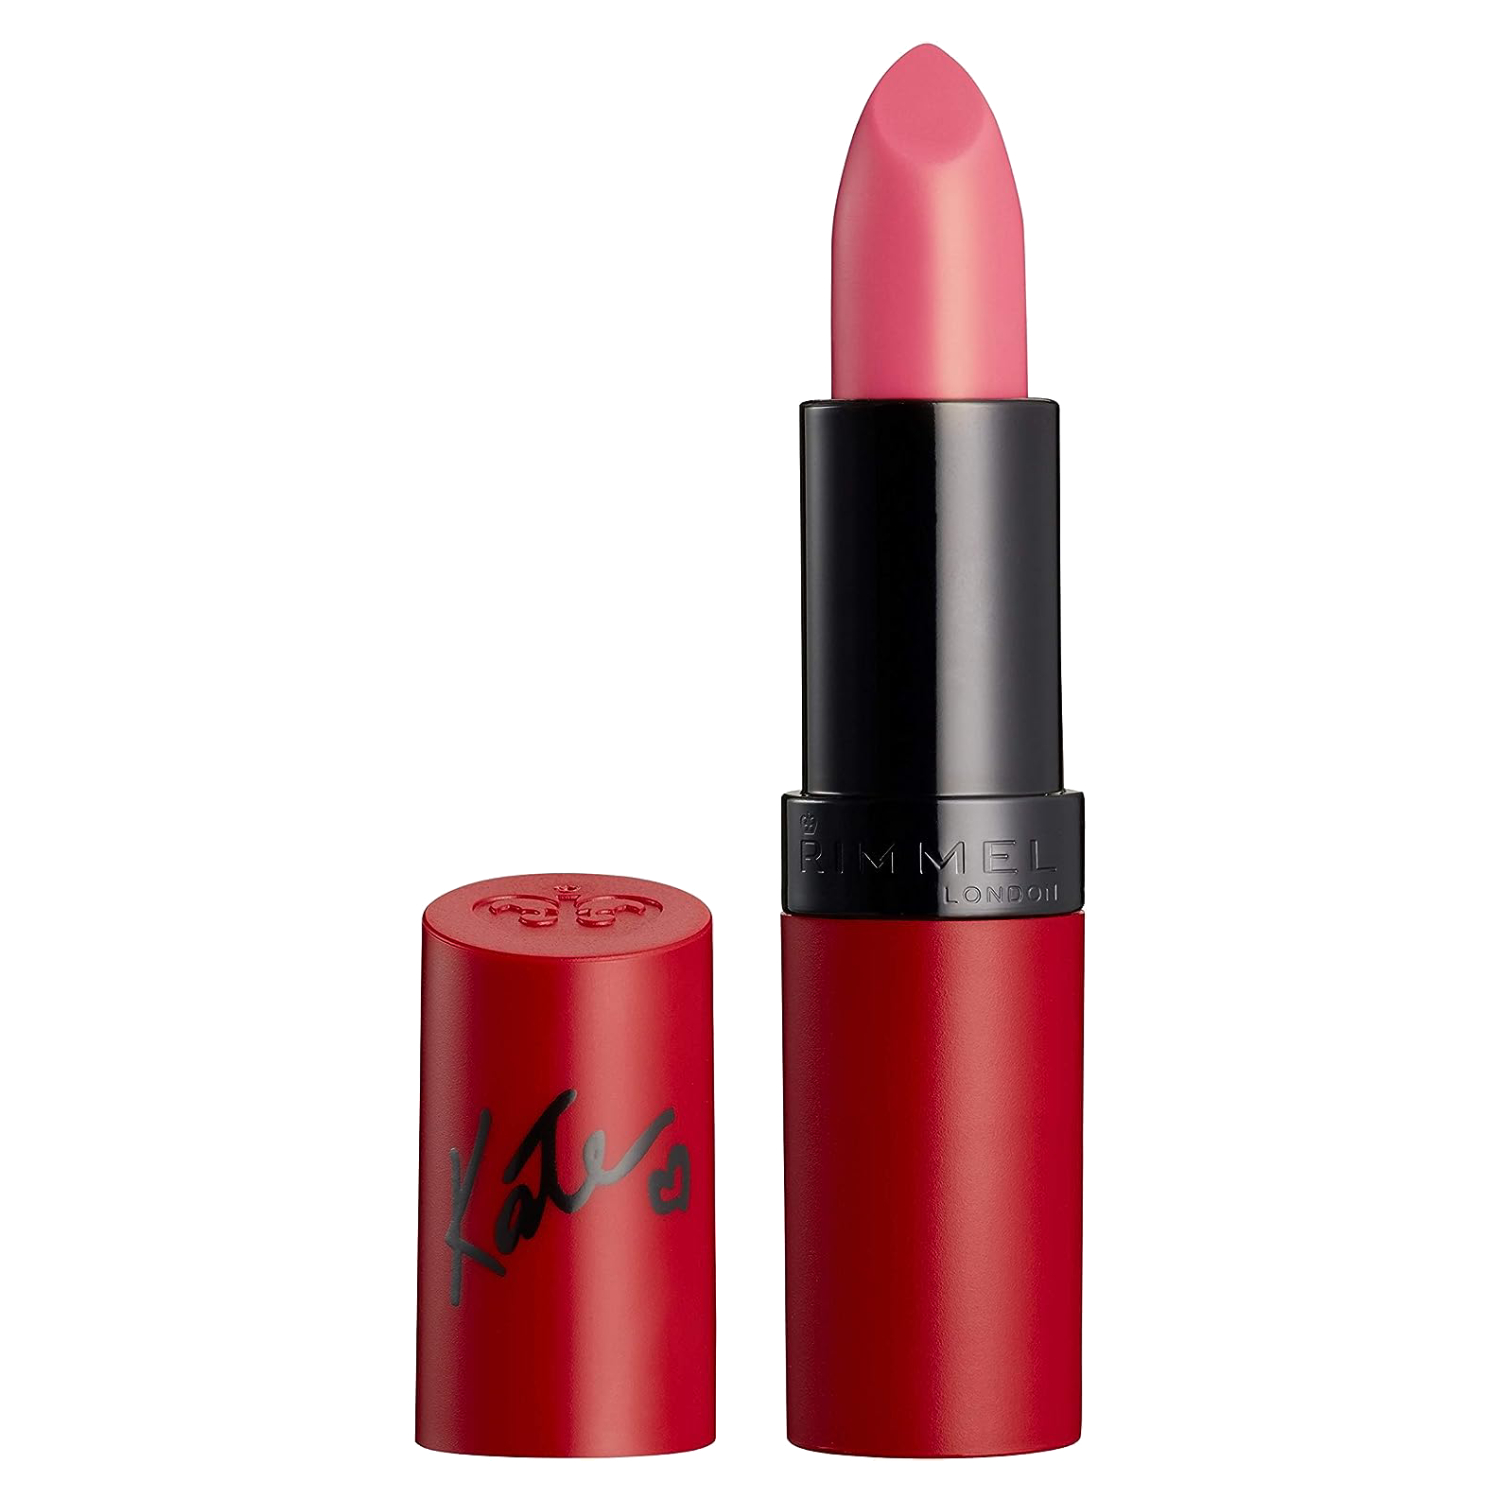 Product Image for Rimmel London Kate Lasting Finish Matte Lipstick 4g